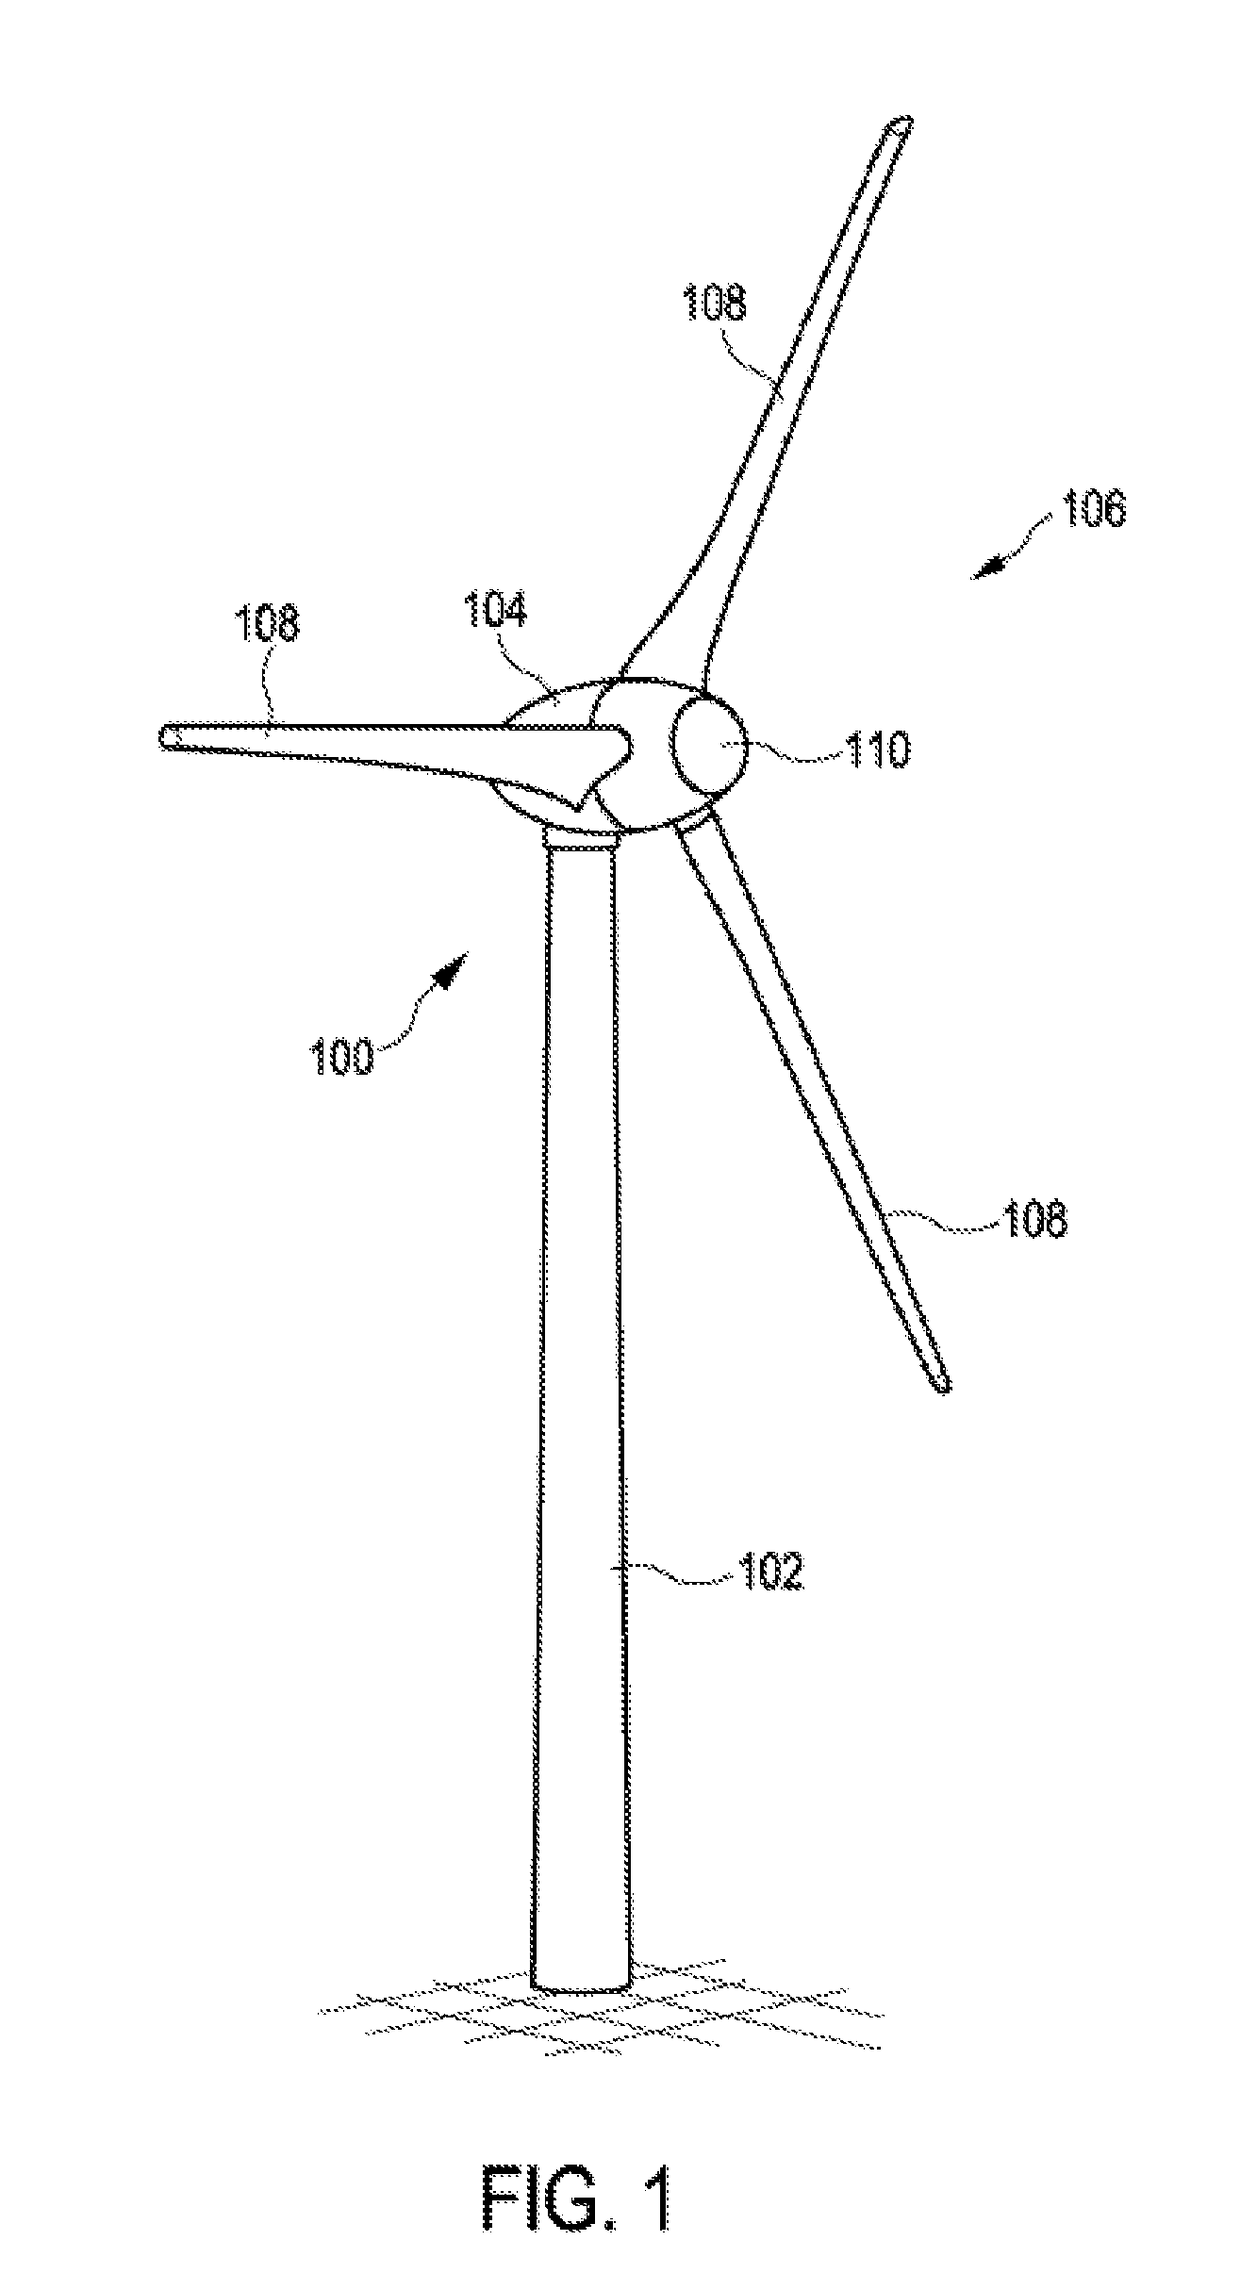 Aircraft beacon of a wind turbine